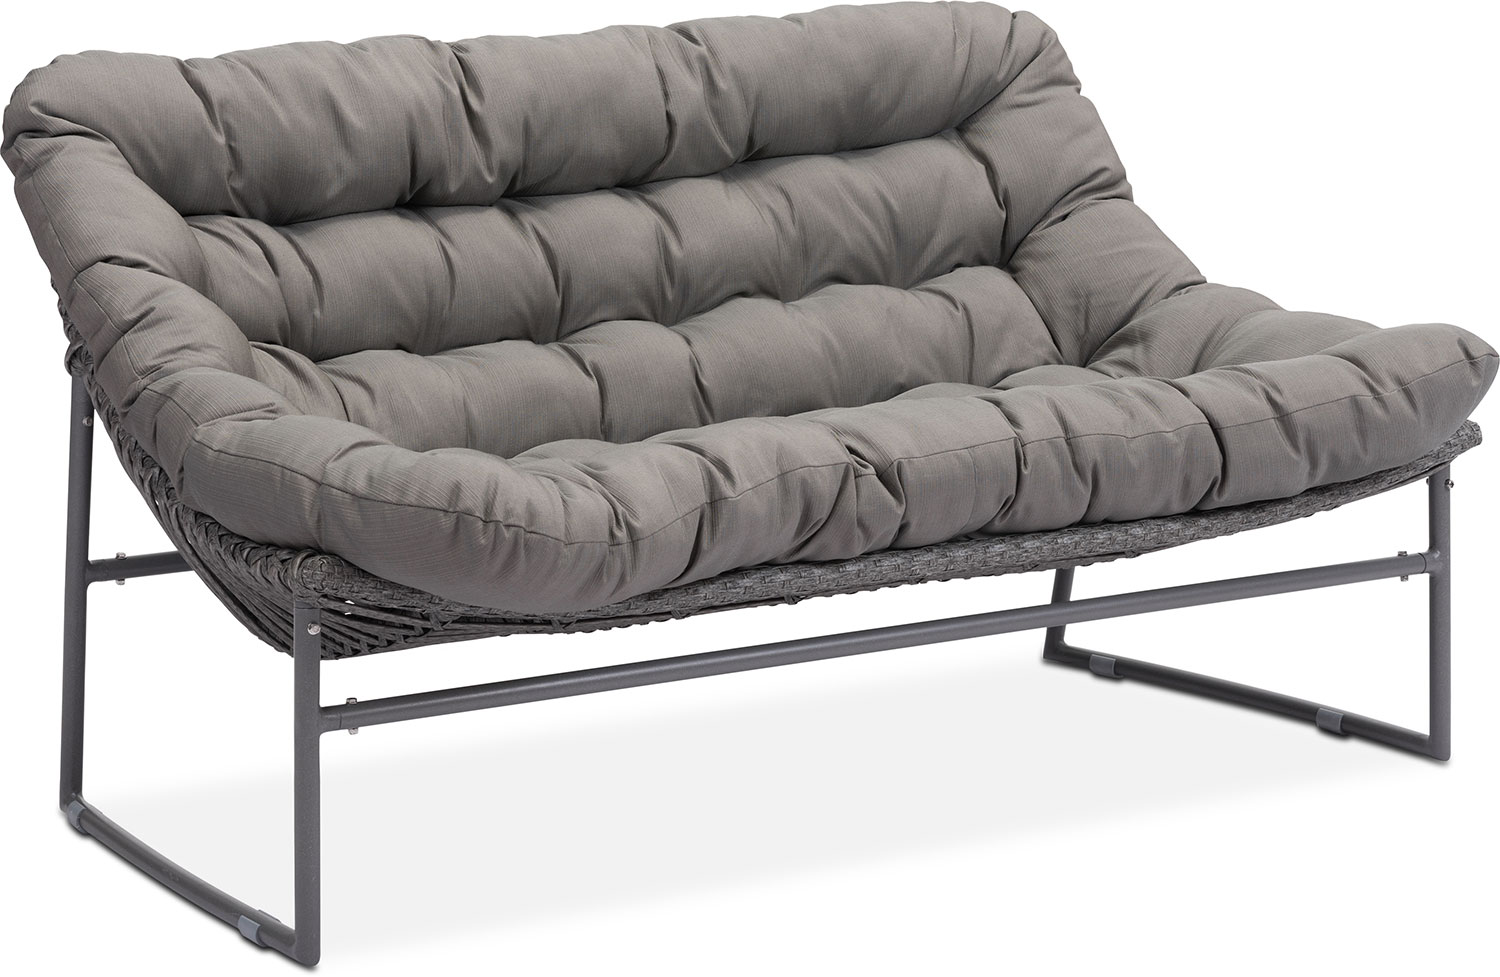 Alexa Outdoor Sofa - Gray | Value City Furniture and Mattresses